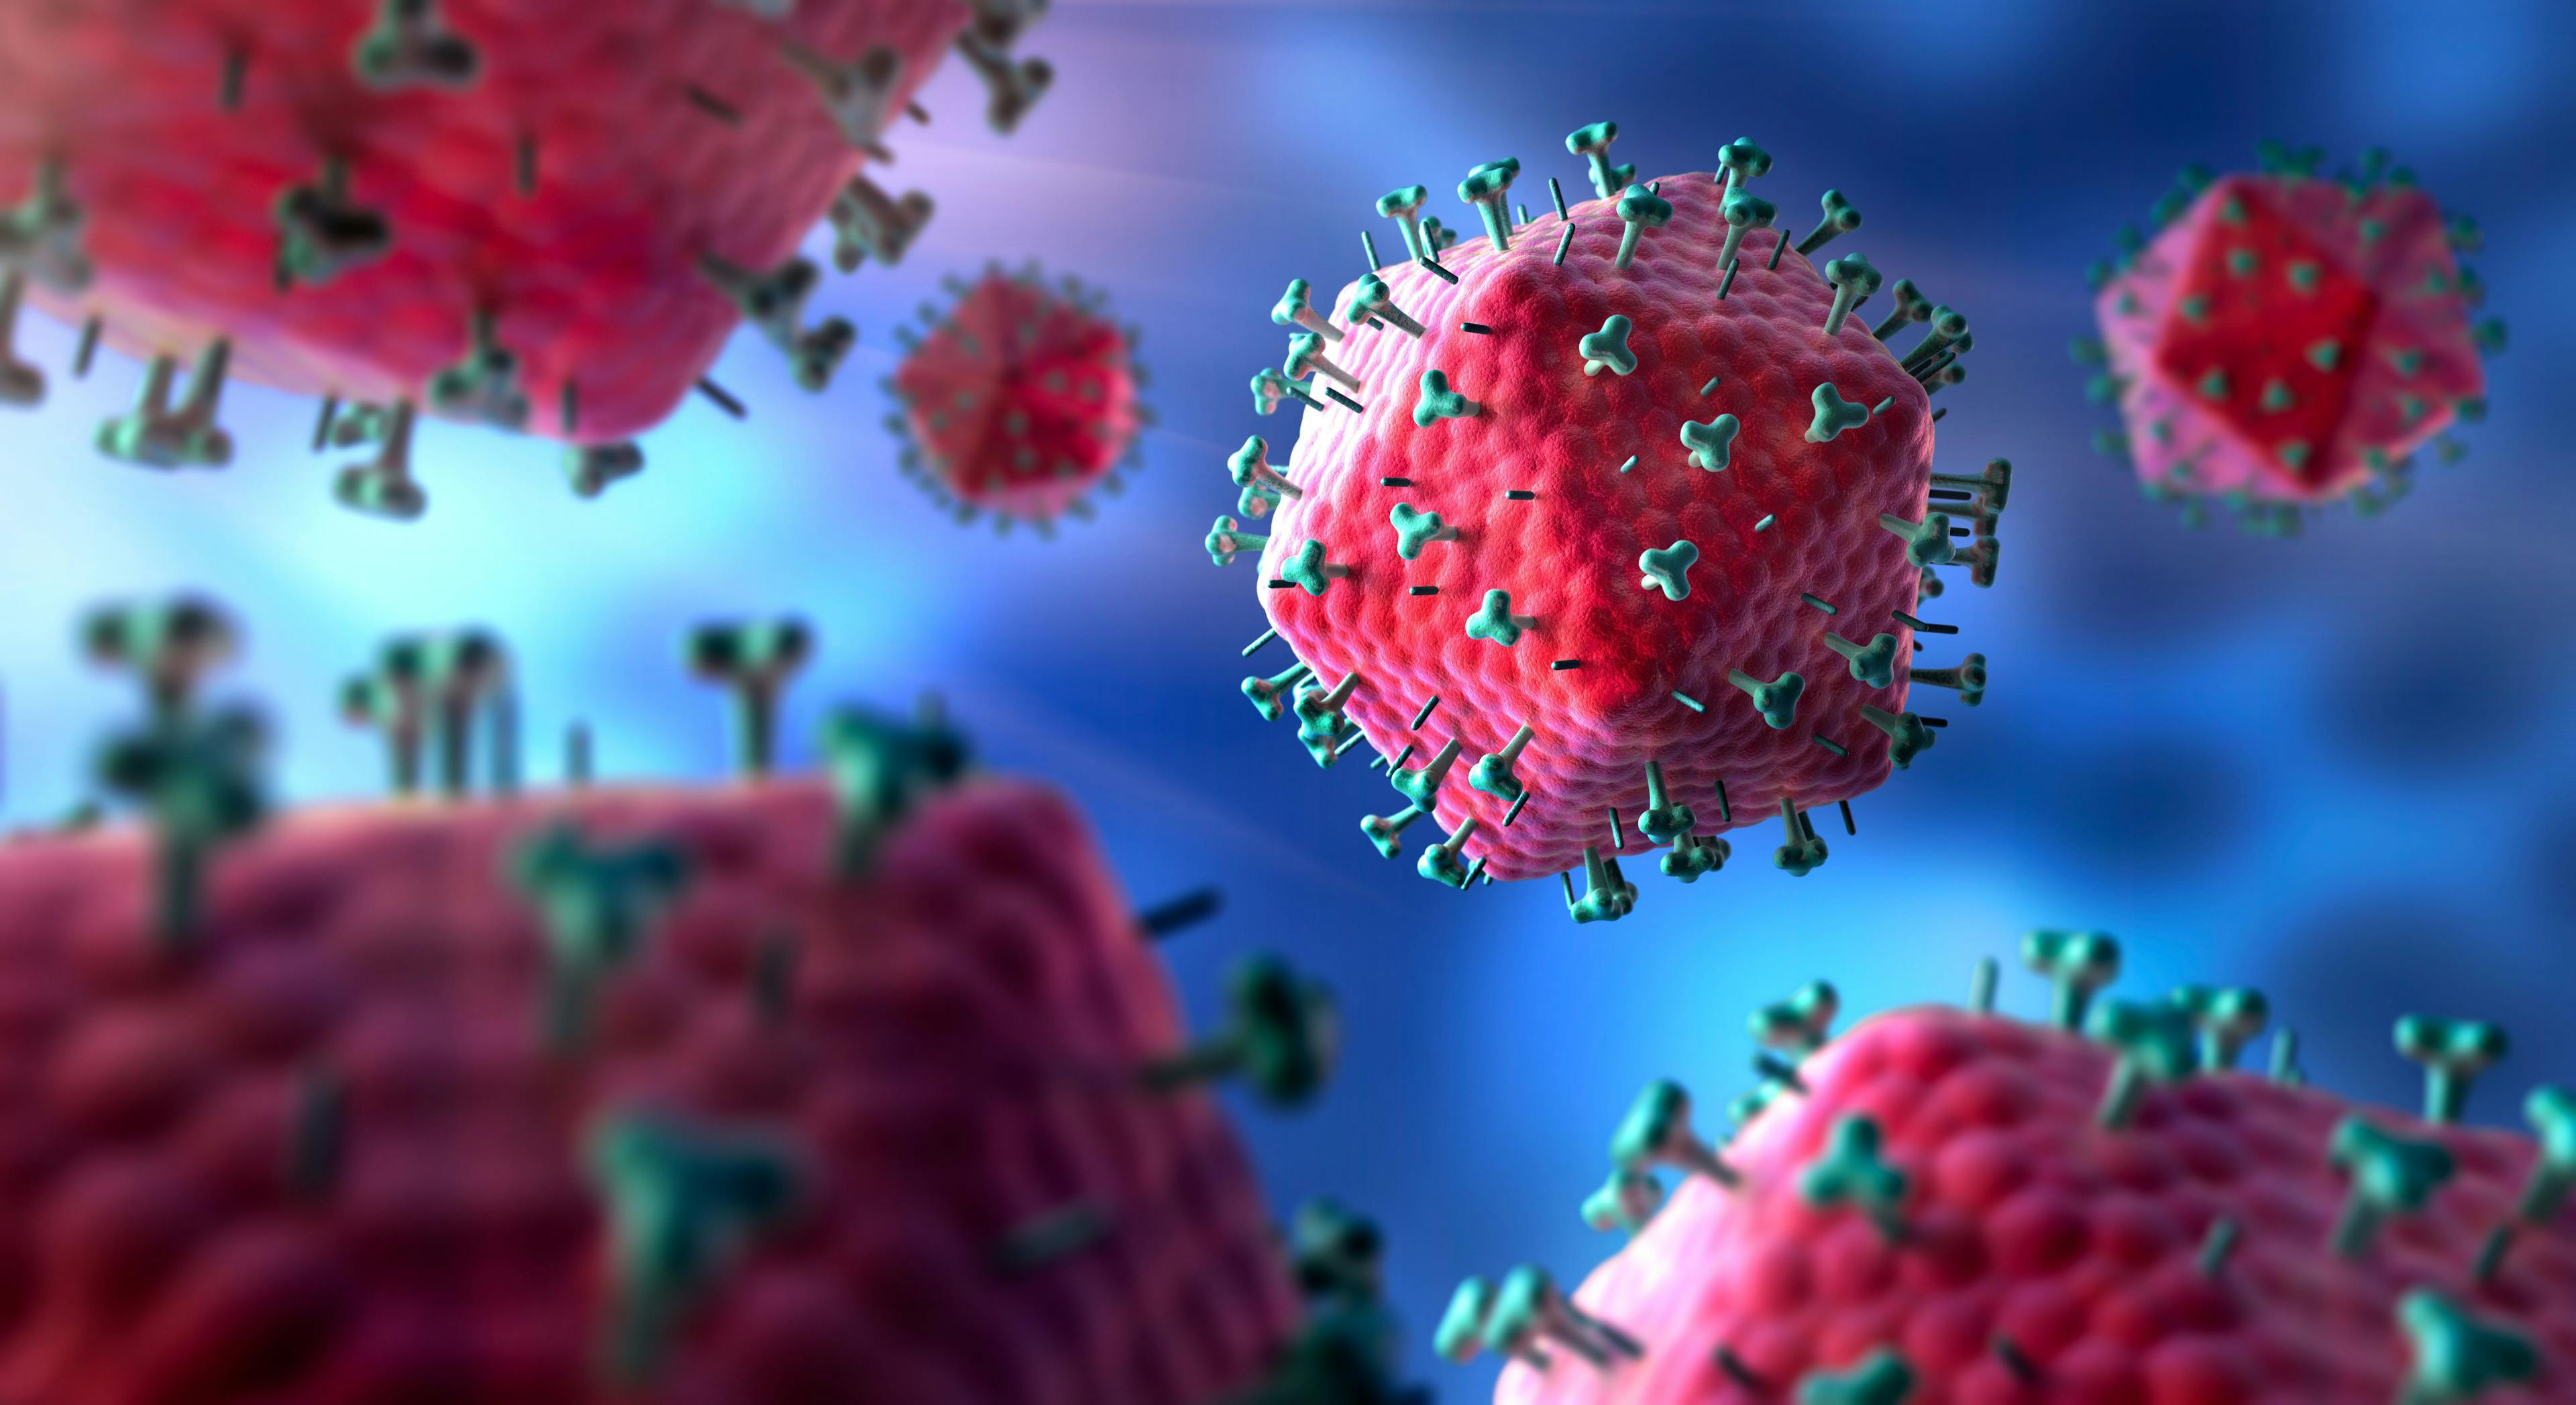 Aids-Viren | Image Credit: peterschreiber.media - stock.adobe.com